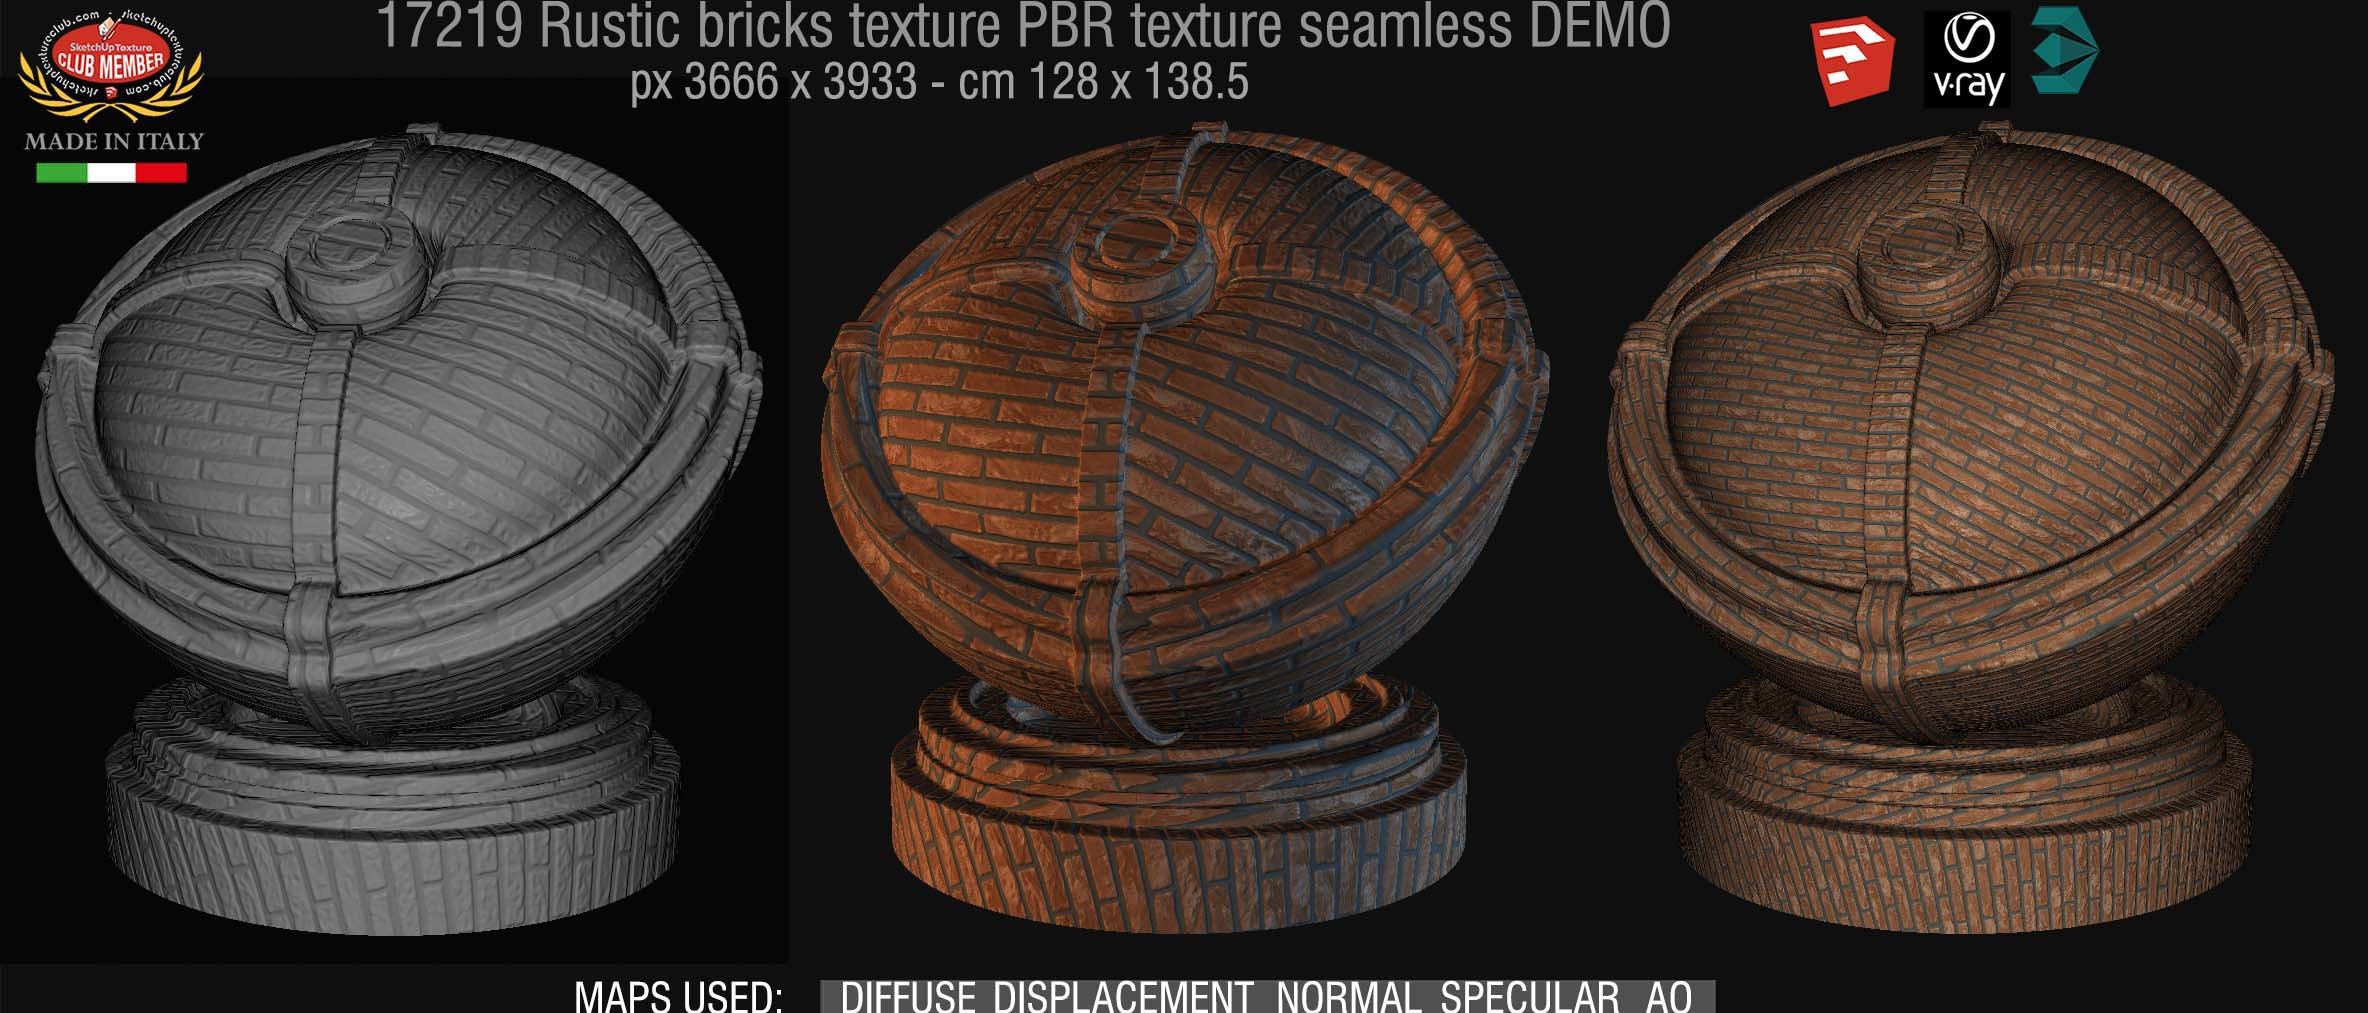 17219 Rustic bricks PBR texture seamless DEMO